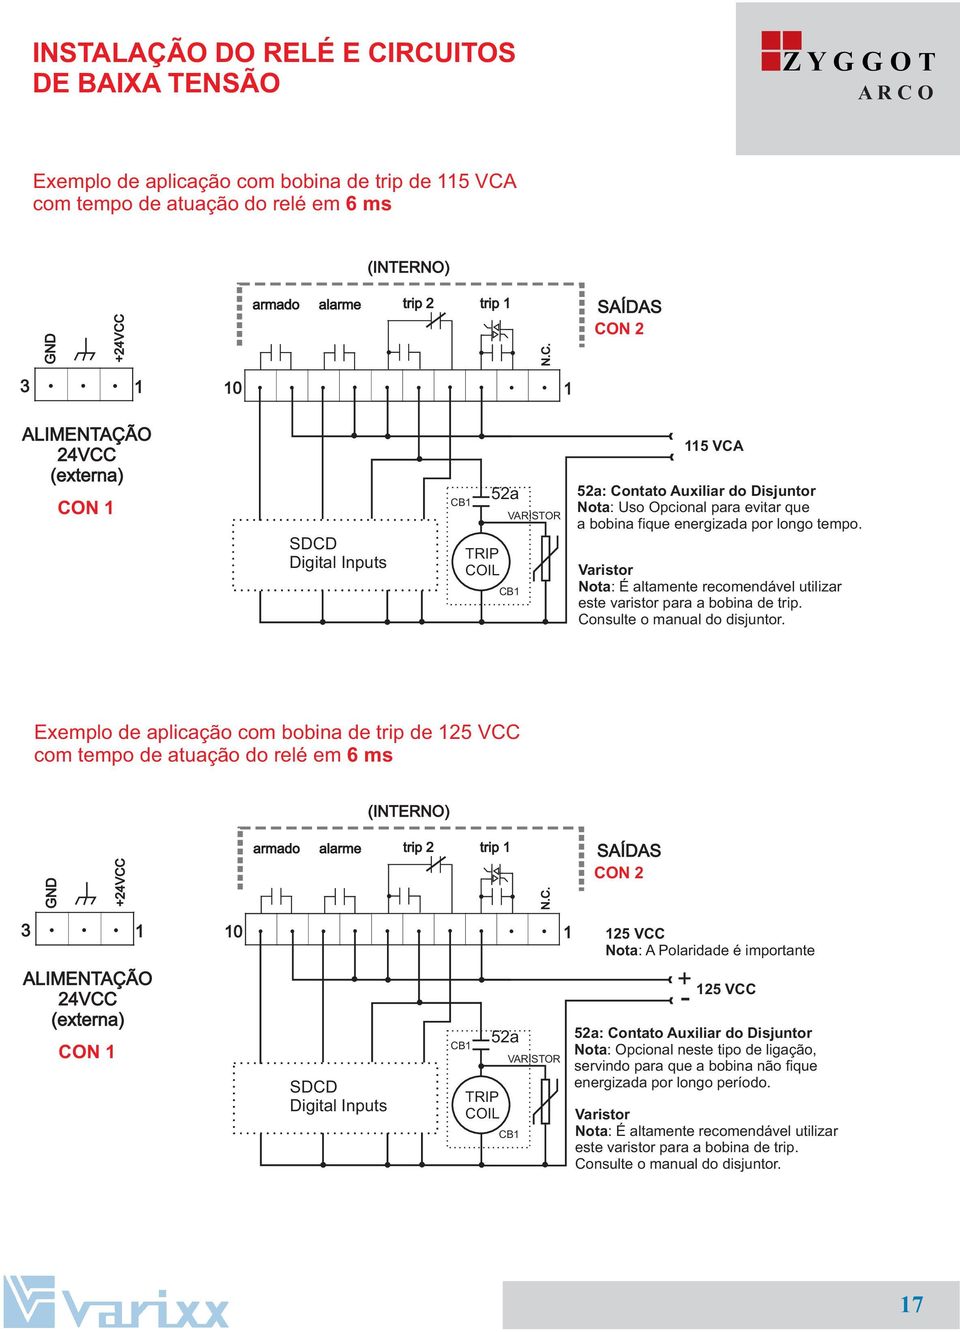 24VCC (externa) CON 1 SDCD Digital Inputs CB1 TRIP COIL 52a VARISTOR CB1 115 VCA 52a: Contato Auxiliar do Disjuntor Nota: Uso Opcional para evitar que a bobina fique energizada por longo tempo.